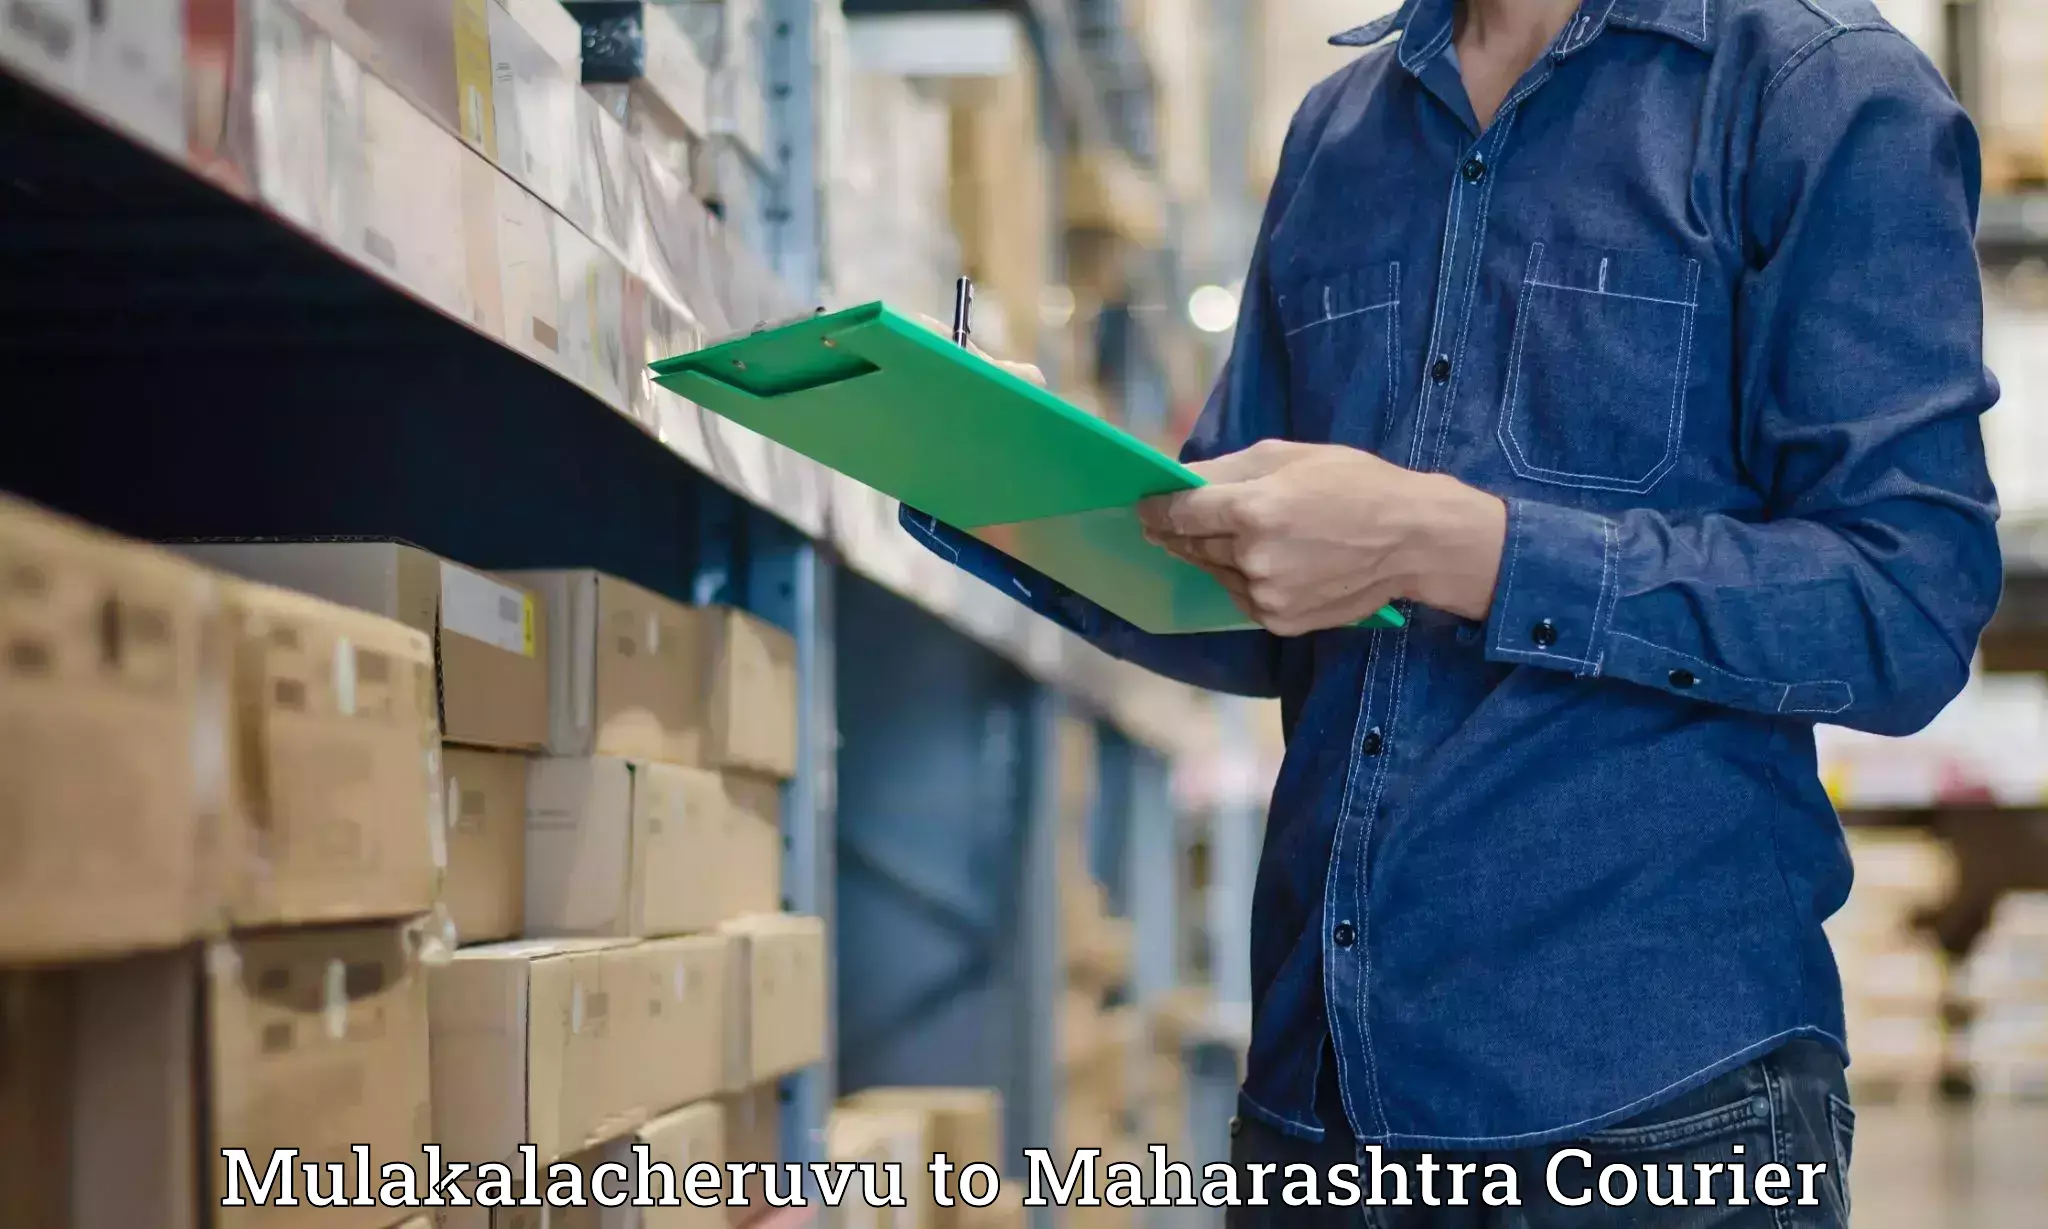 Courier service partnerships Mulakalacheruvu to Maharashtra